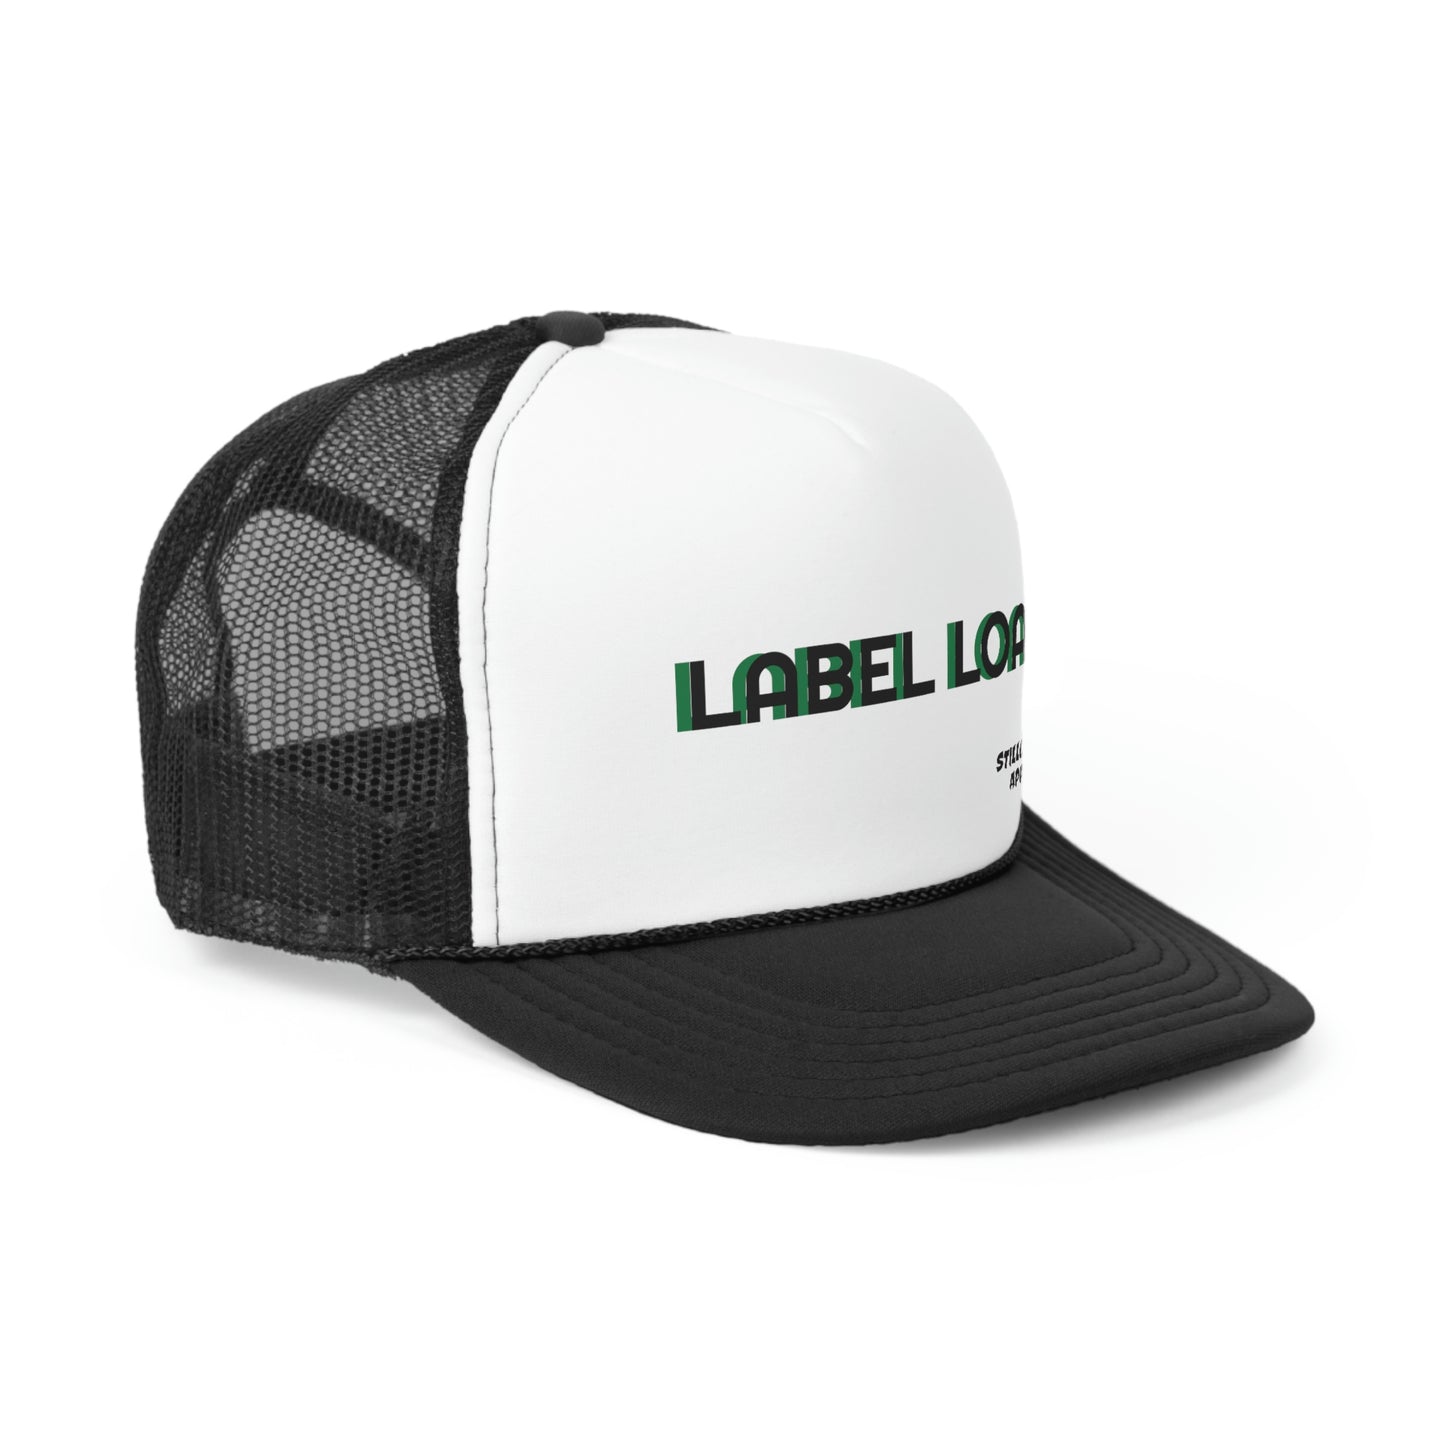 STILLGETPAID®️ APPAREL LABEL LOAF Trucker Caps